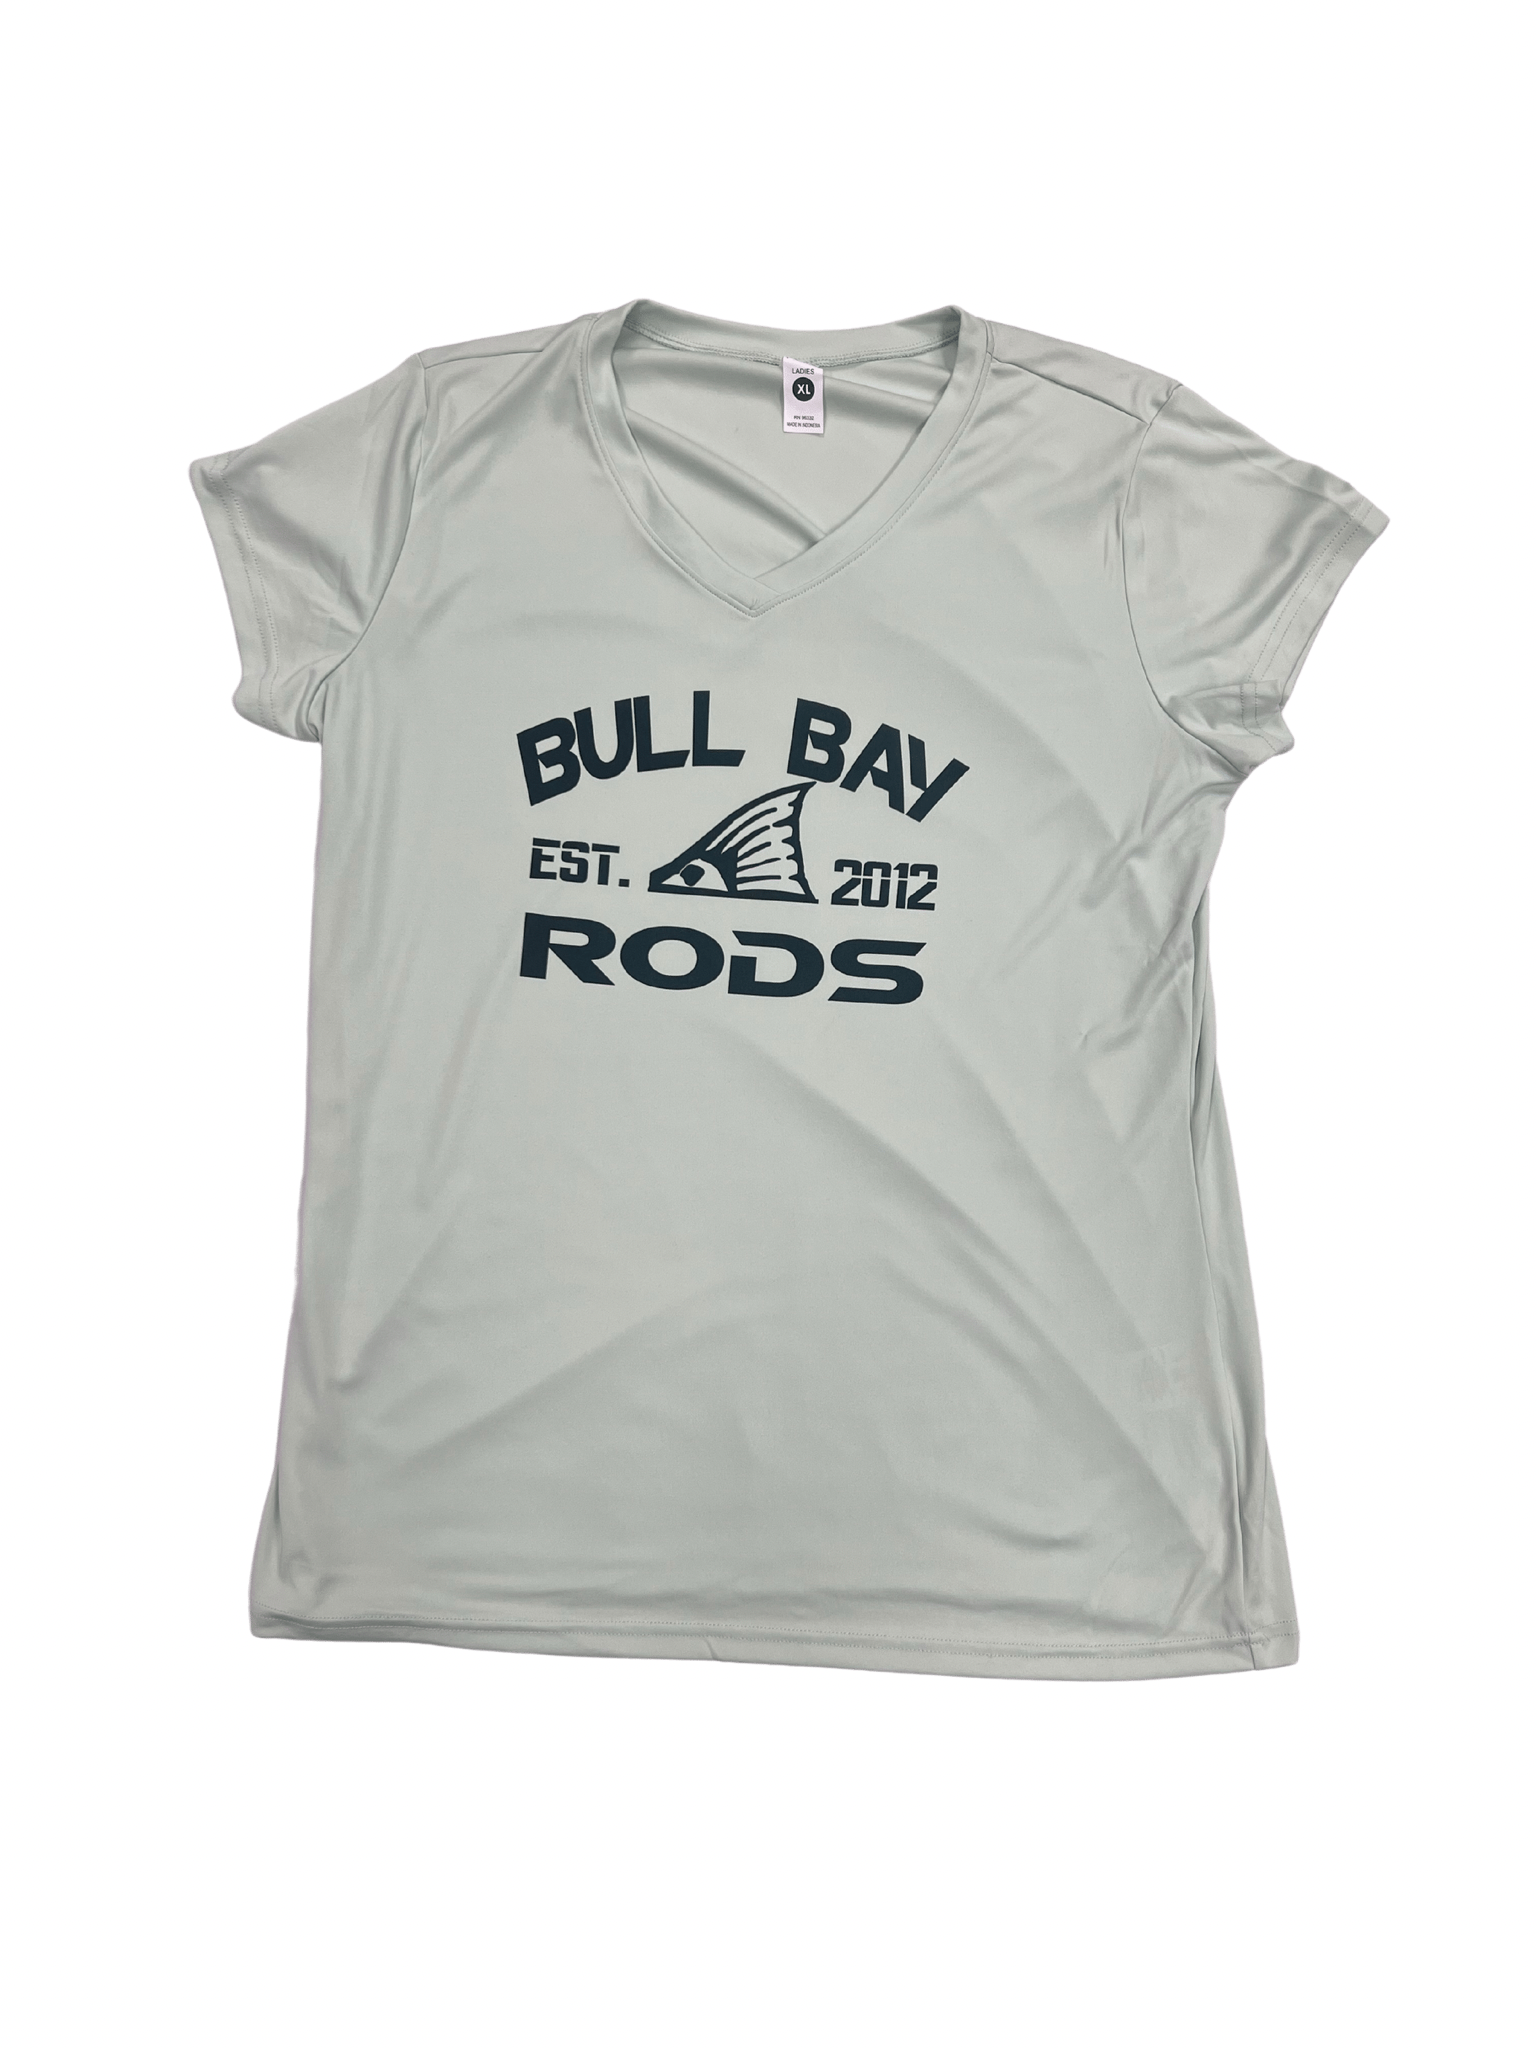 Ladies Bull Bay Est 2012 Short Sleeve T-Shirts